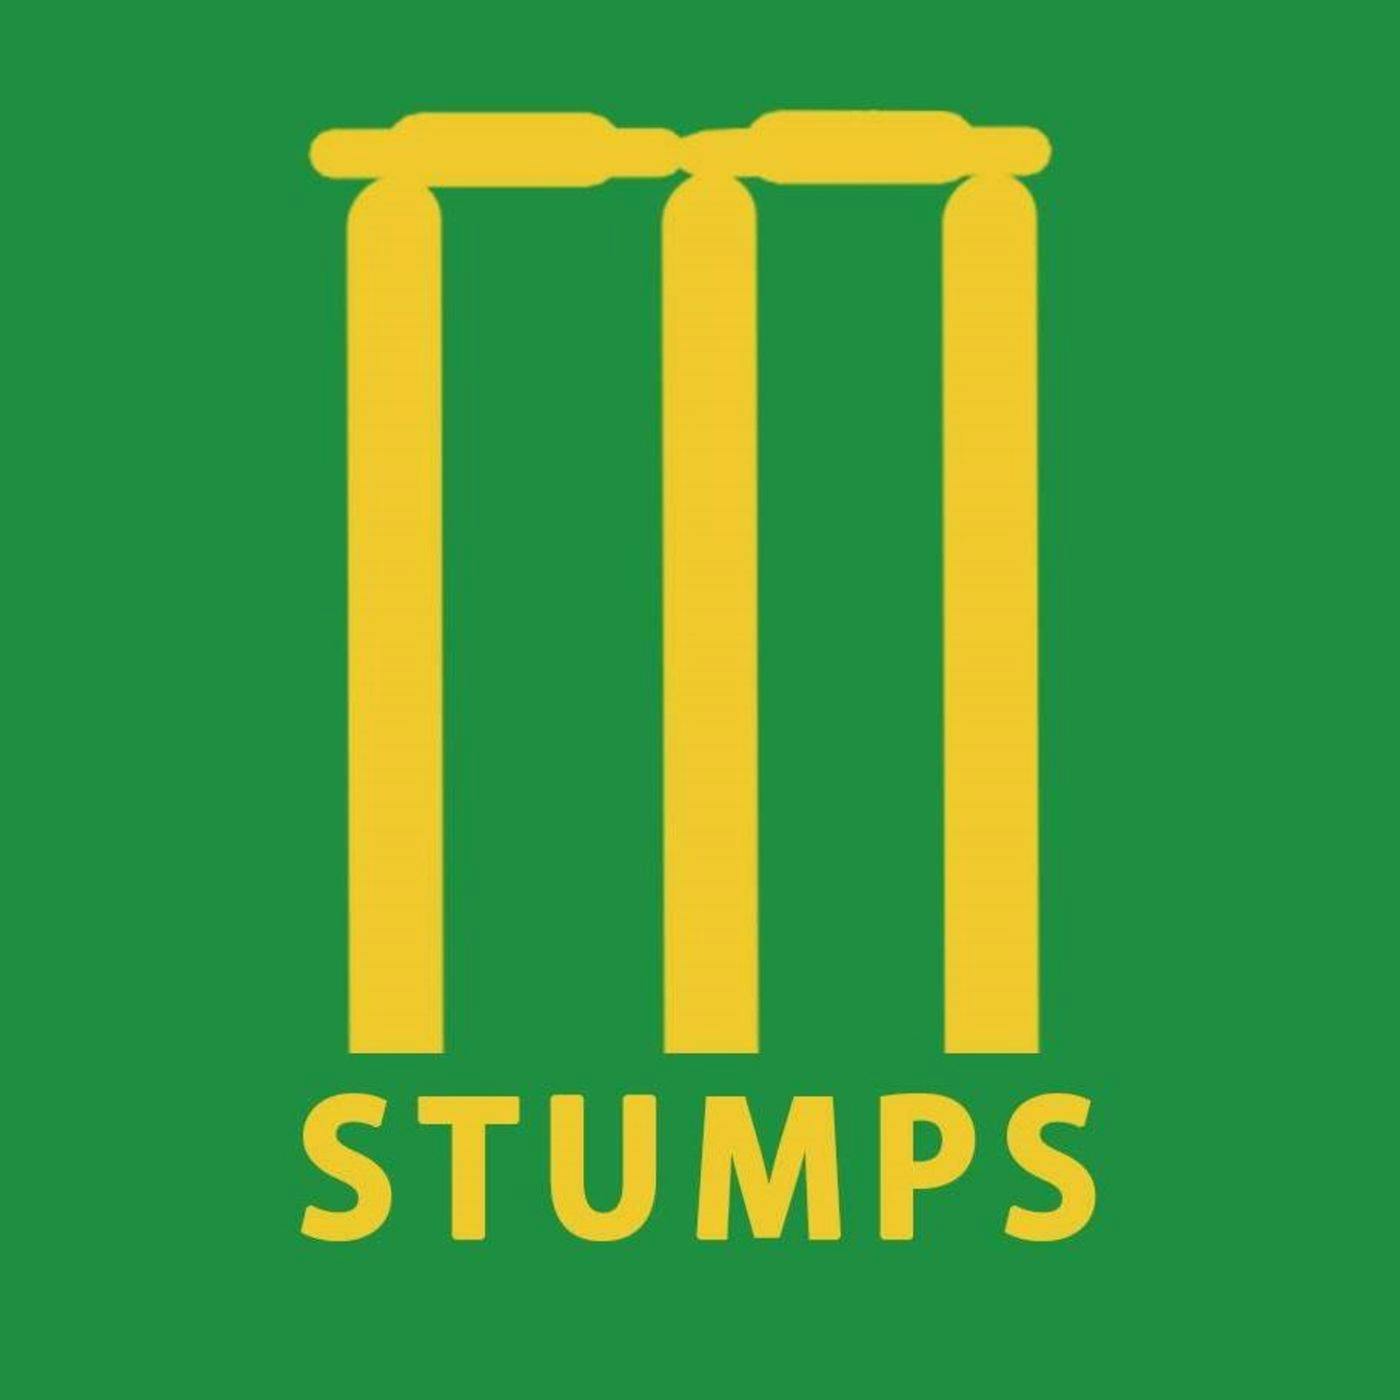 Stumps Episode 11 (14/12/2019)